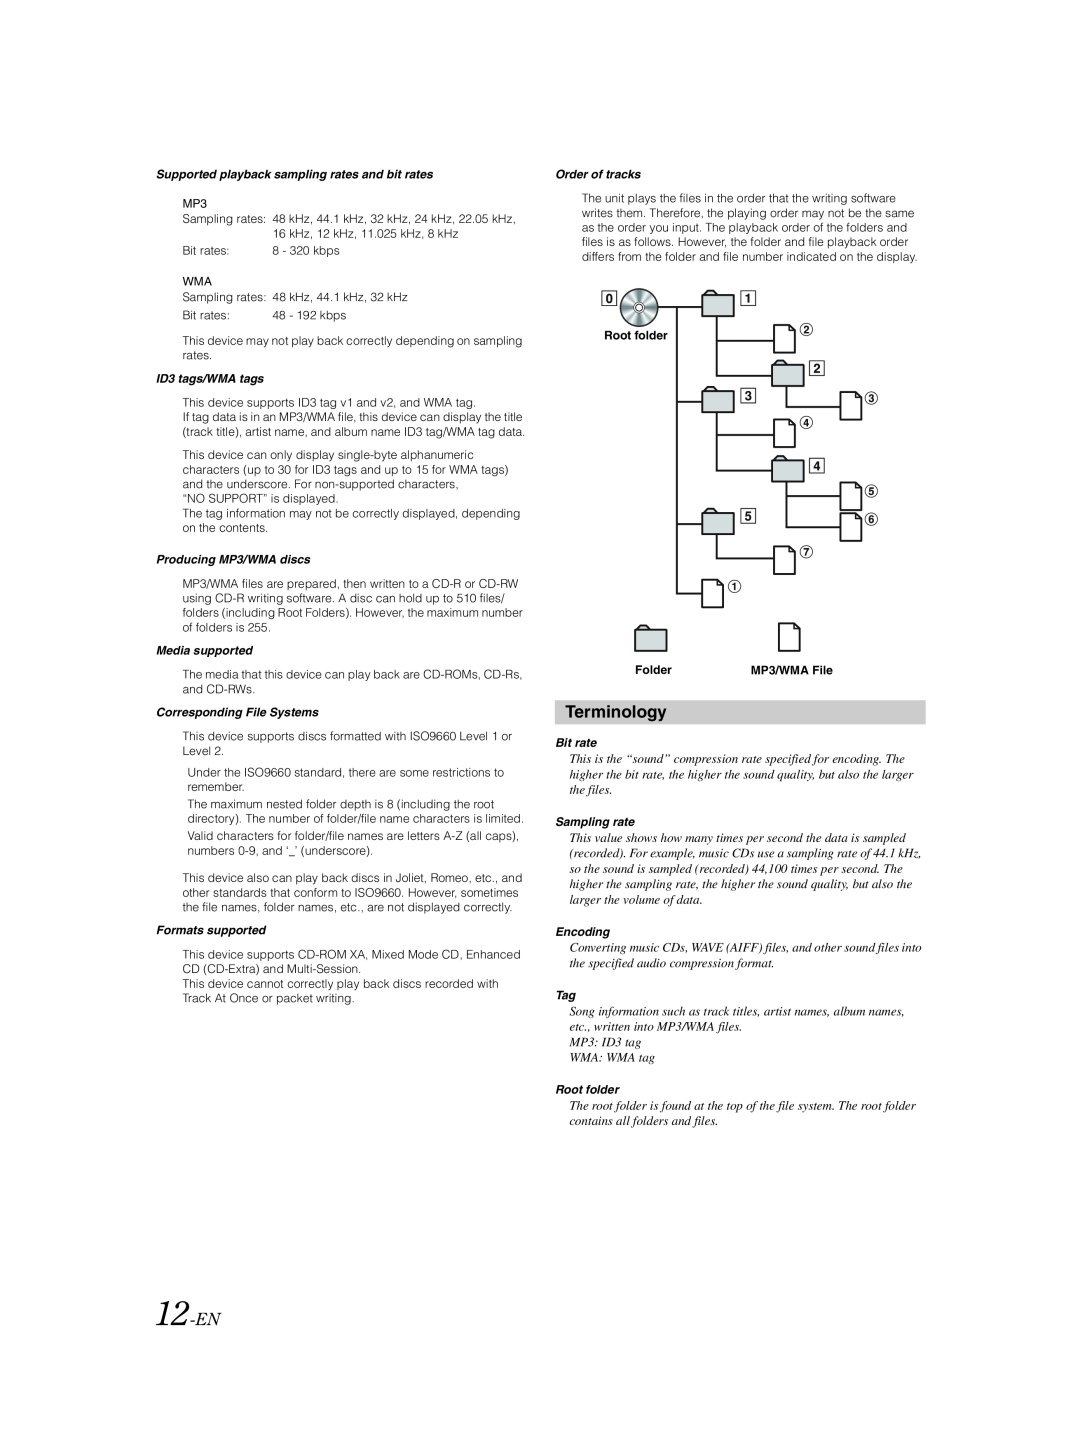 Alpine CDA-9857 owner manual Terminology, 12-EN 